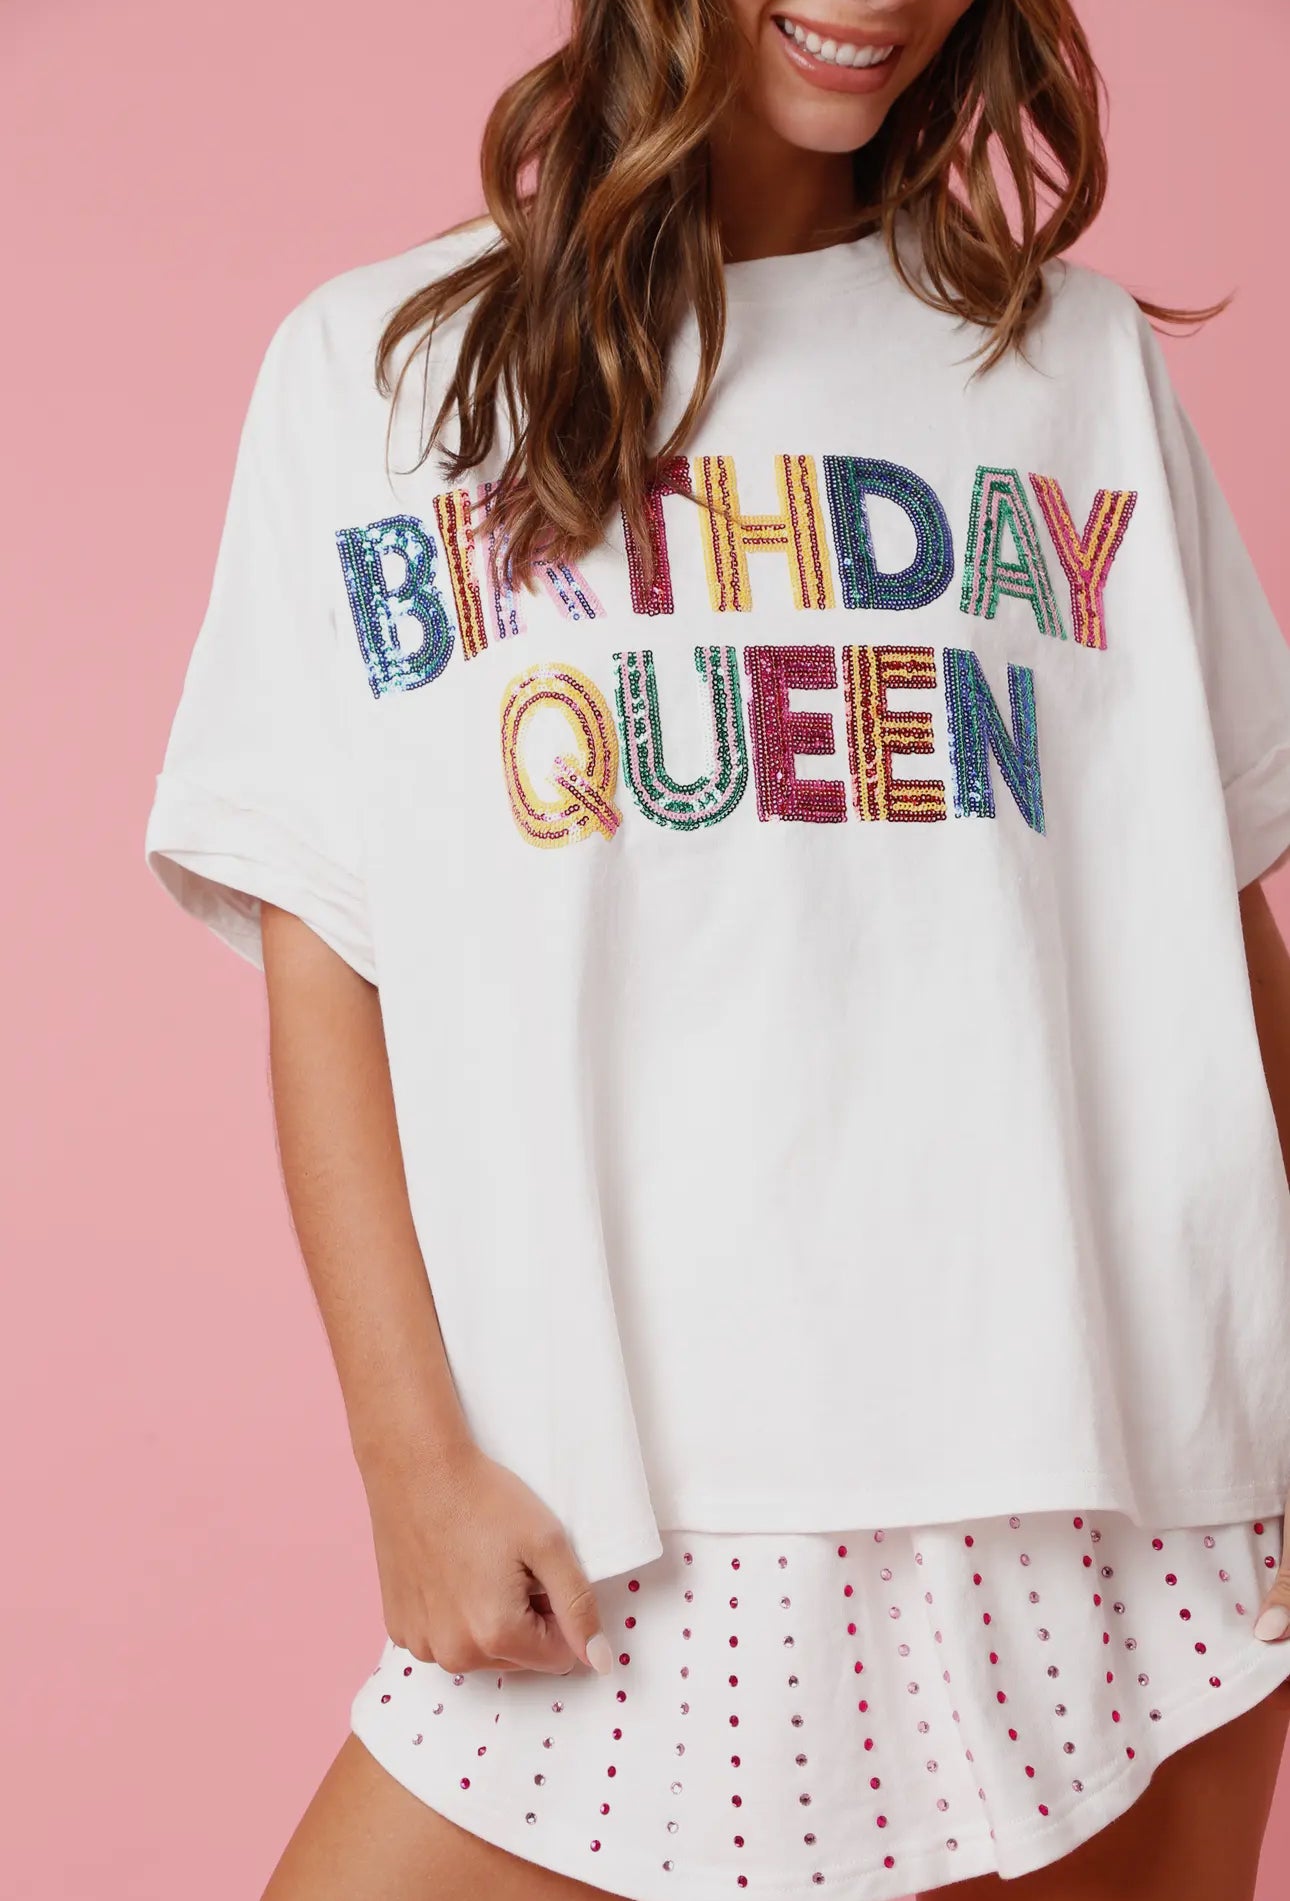 Birthday Queen White Top (short preorder)